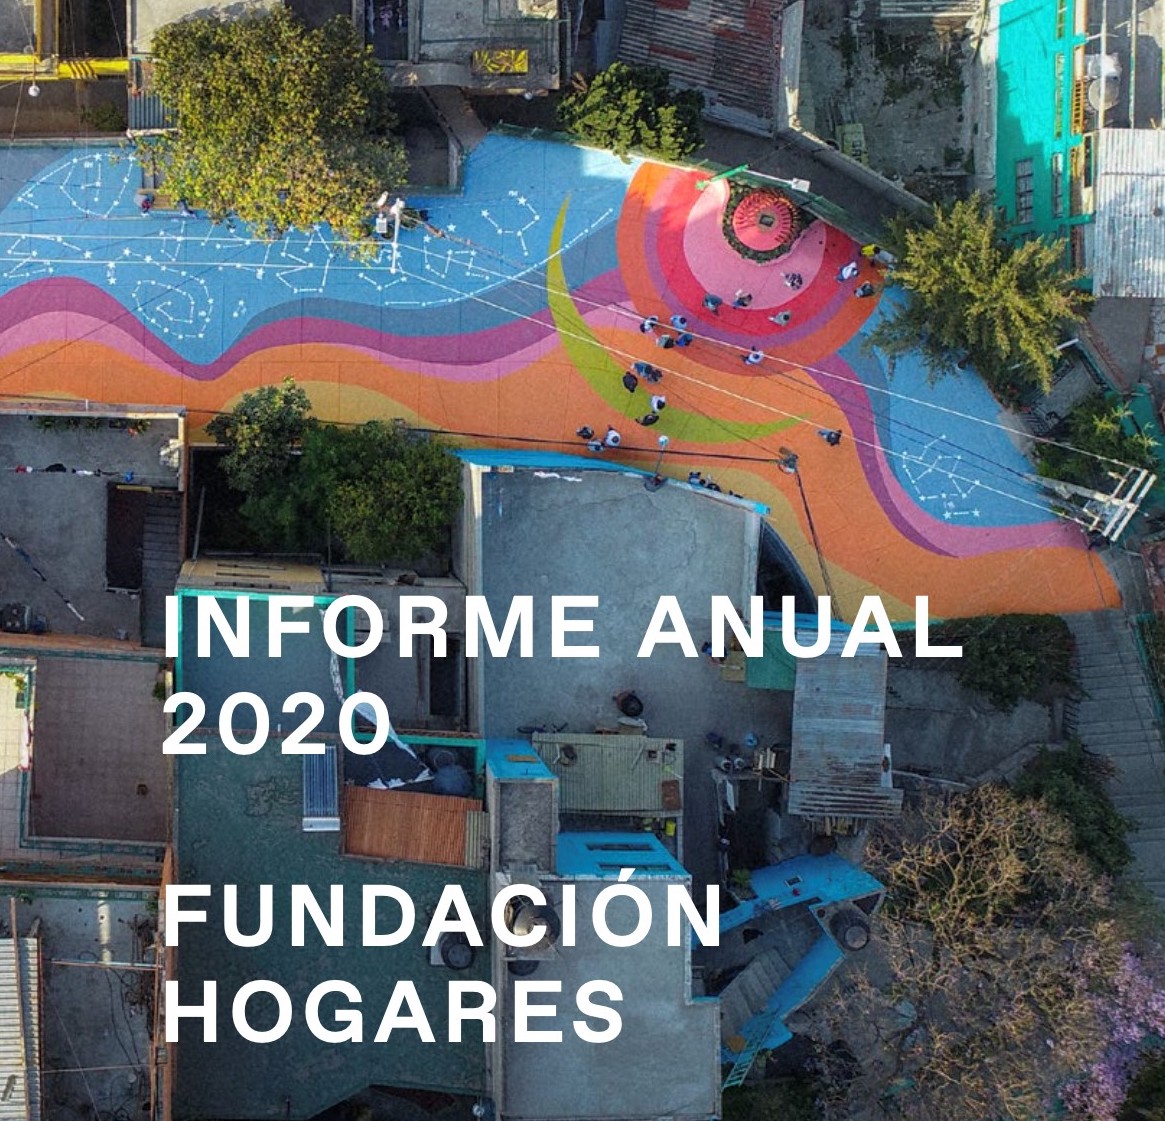 2020, un año de retos para Fundación Hogares - portada informe anual 2020 1 2